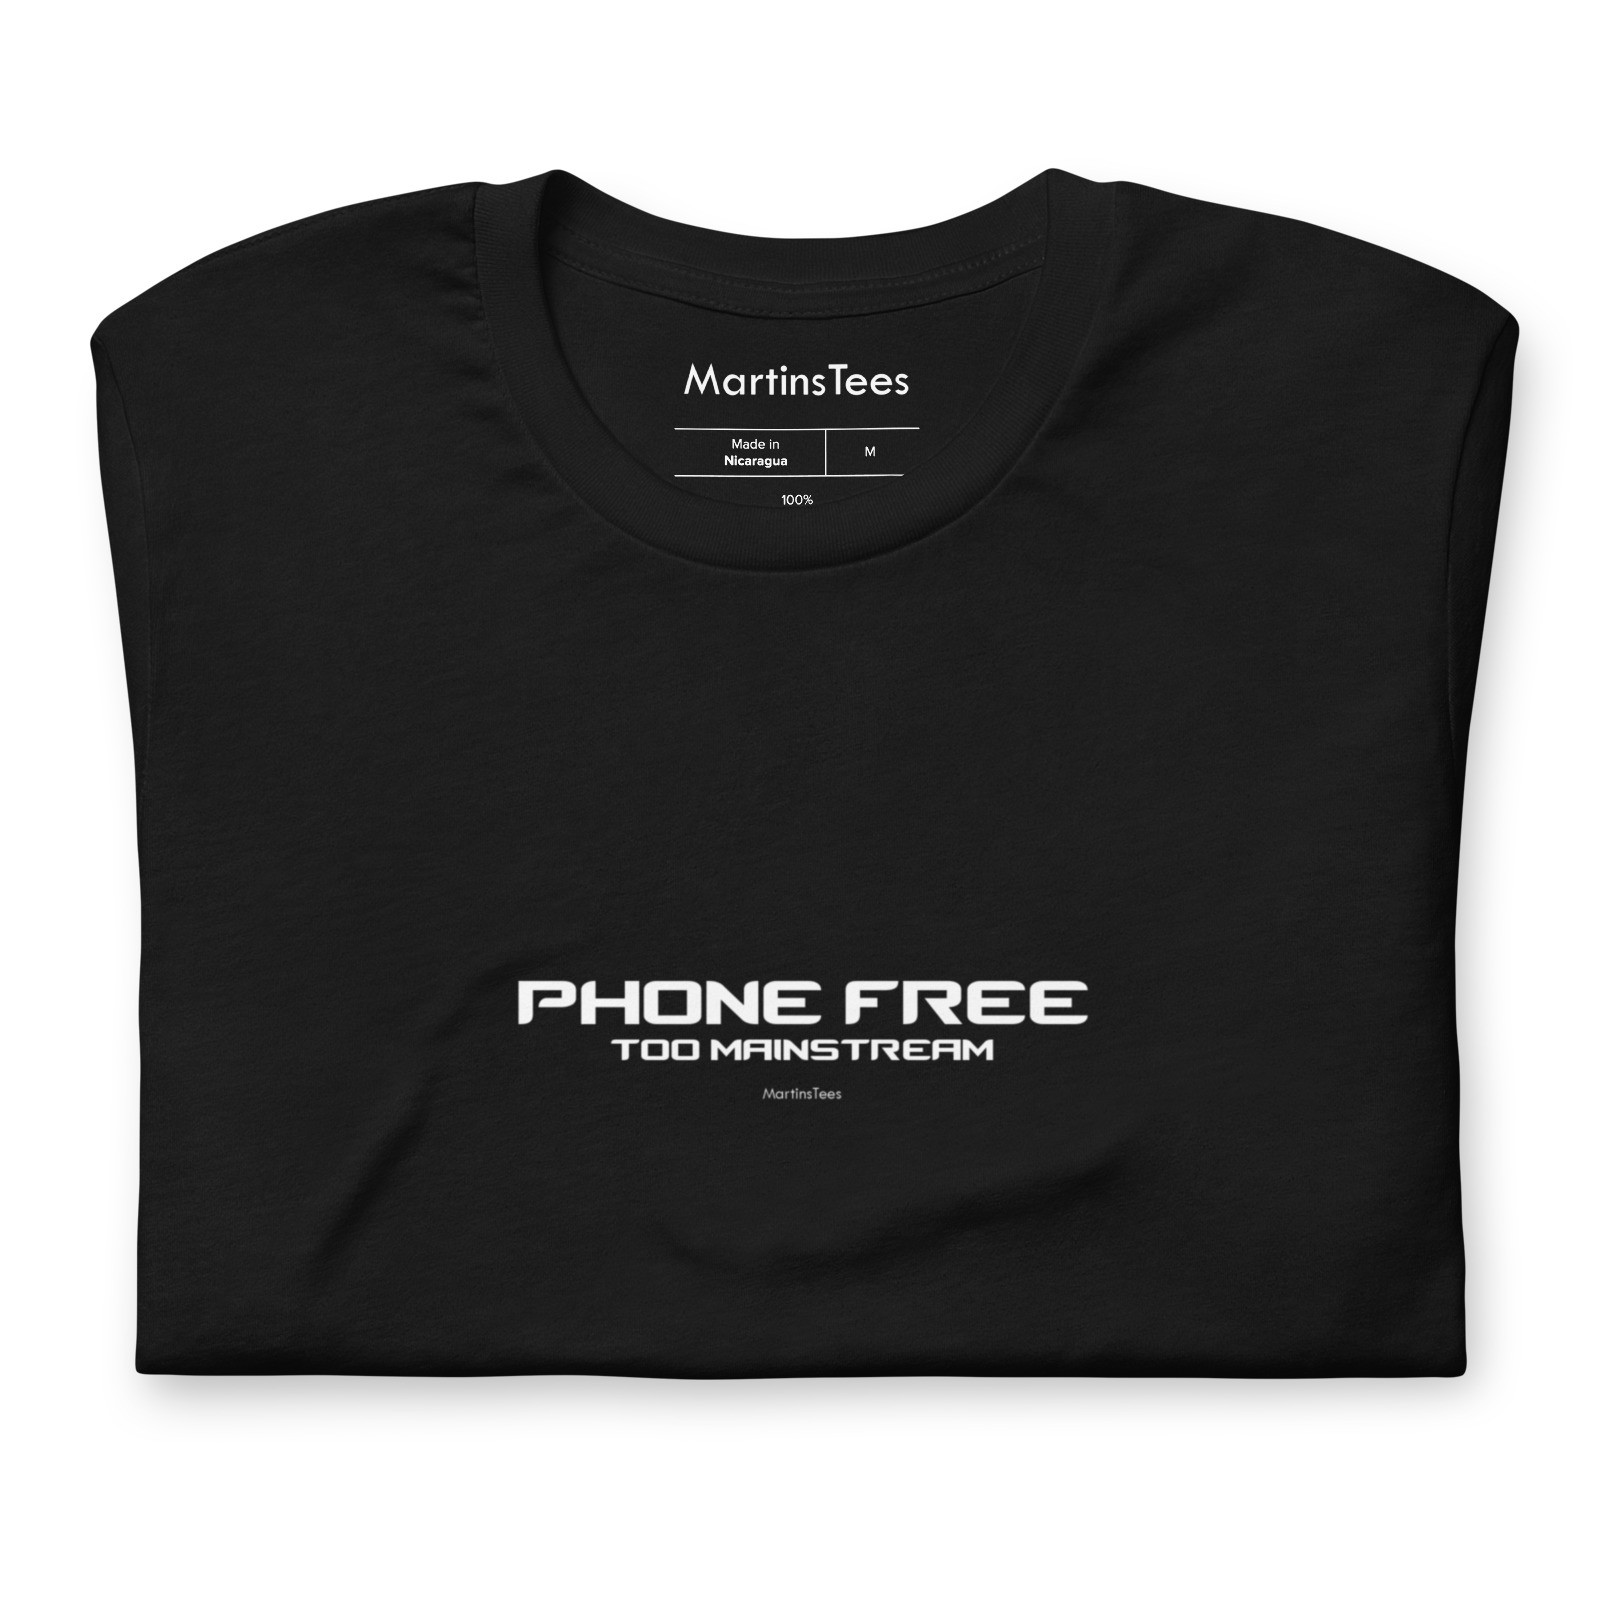 T-shirt: PHONE FREE - TOO MAINSTREAM